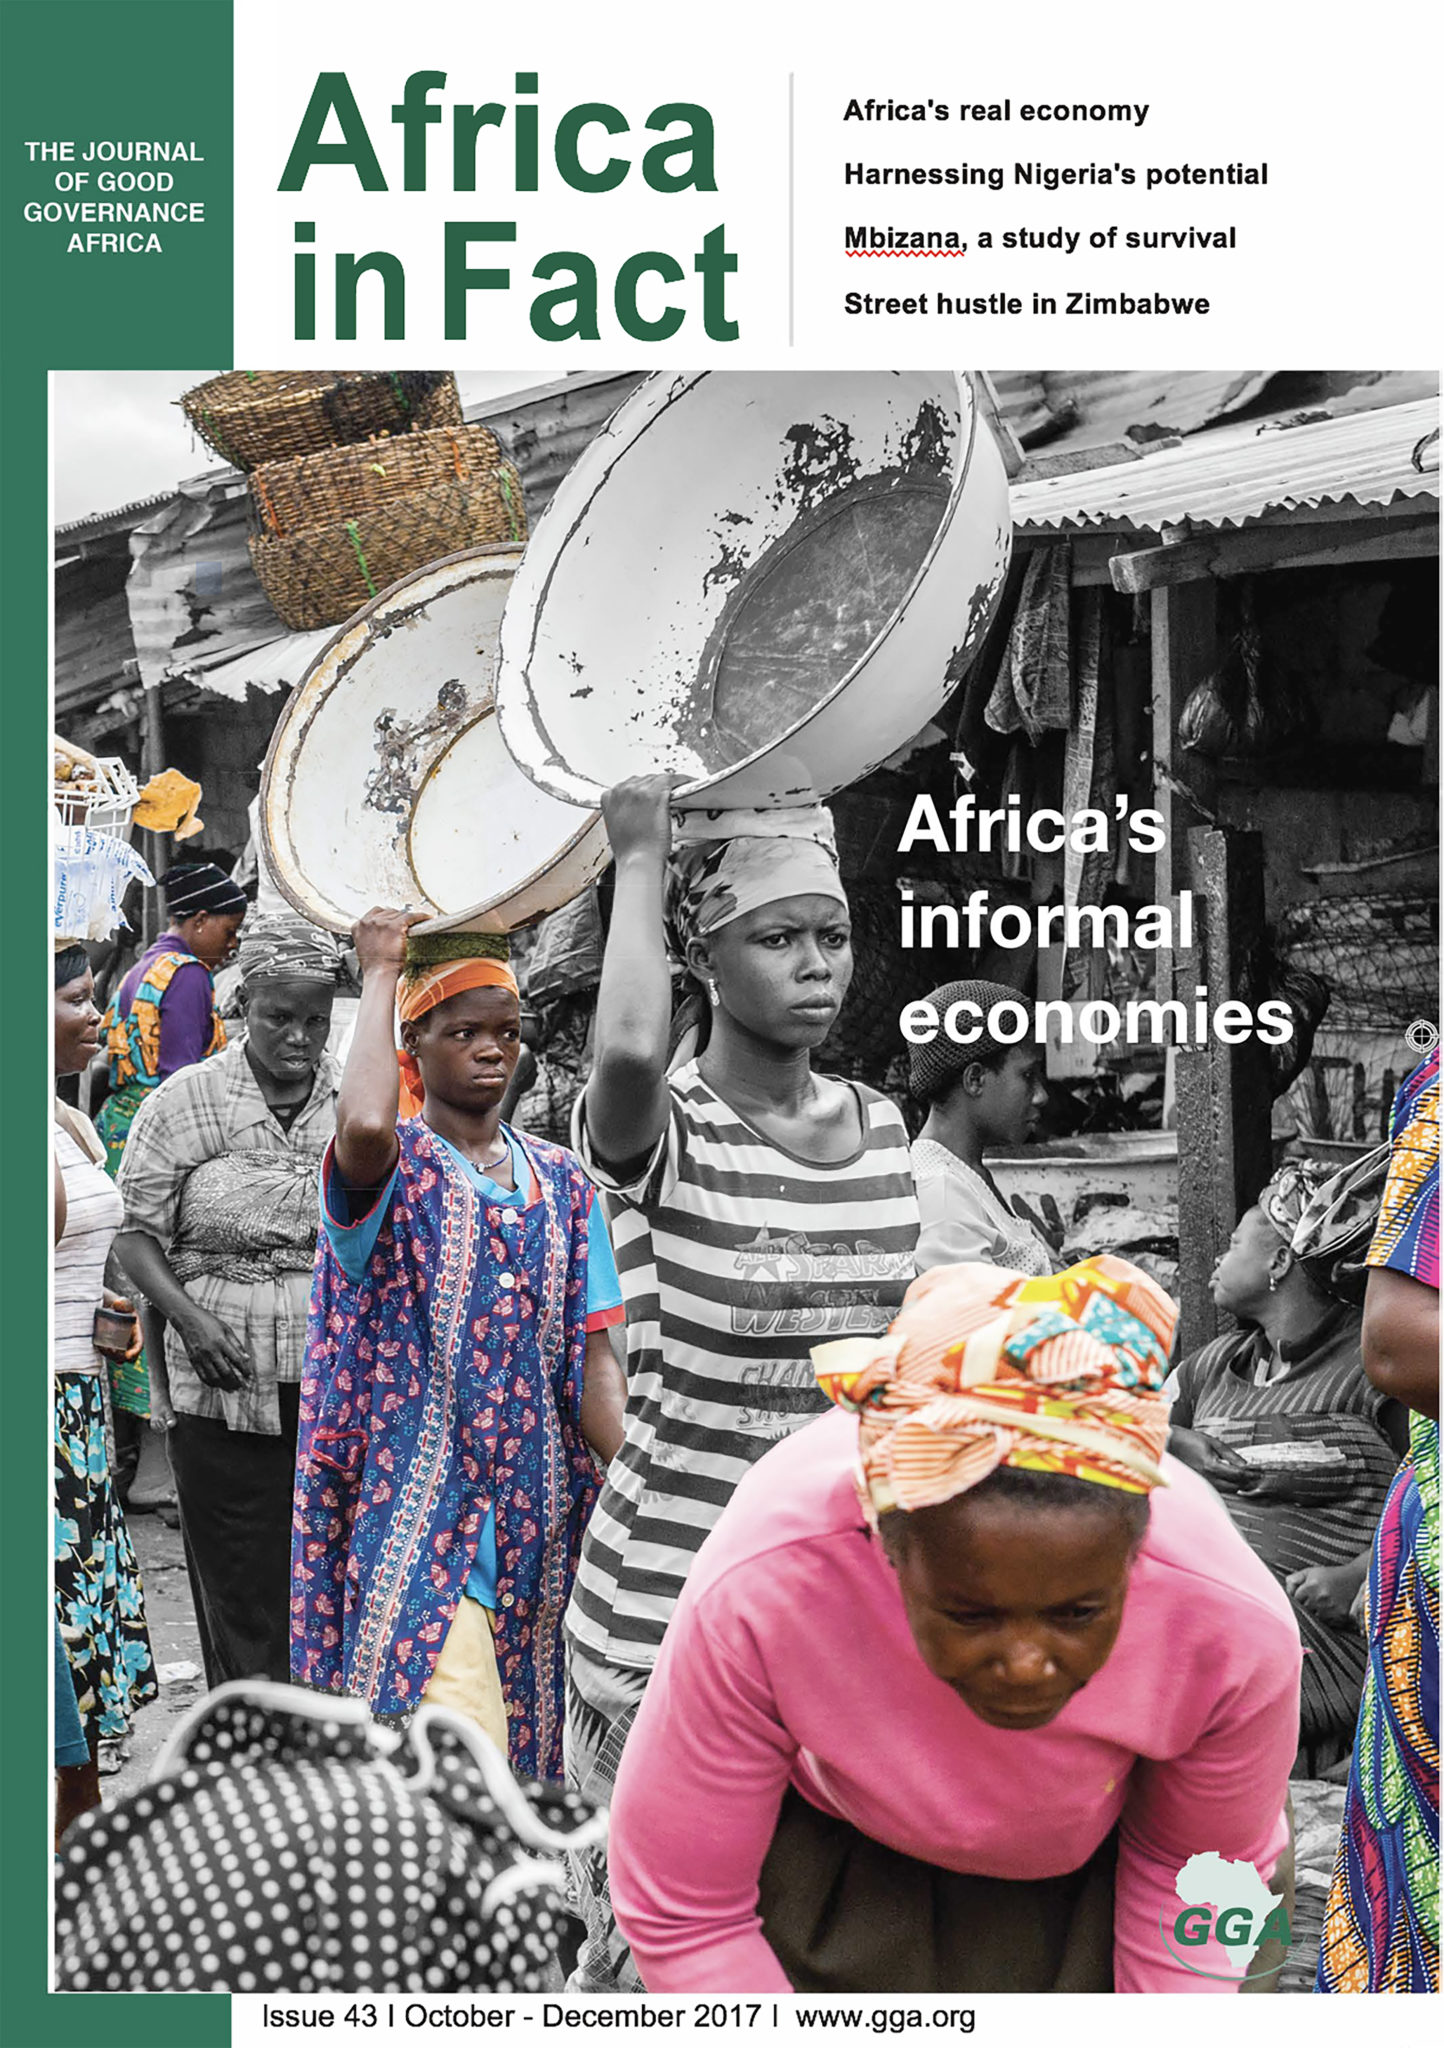 PODCAST: Africa’s Informal Economies